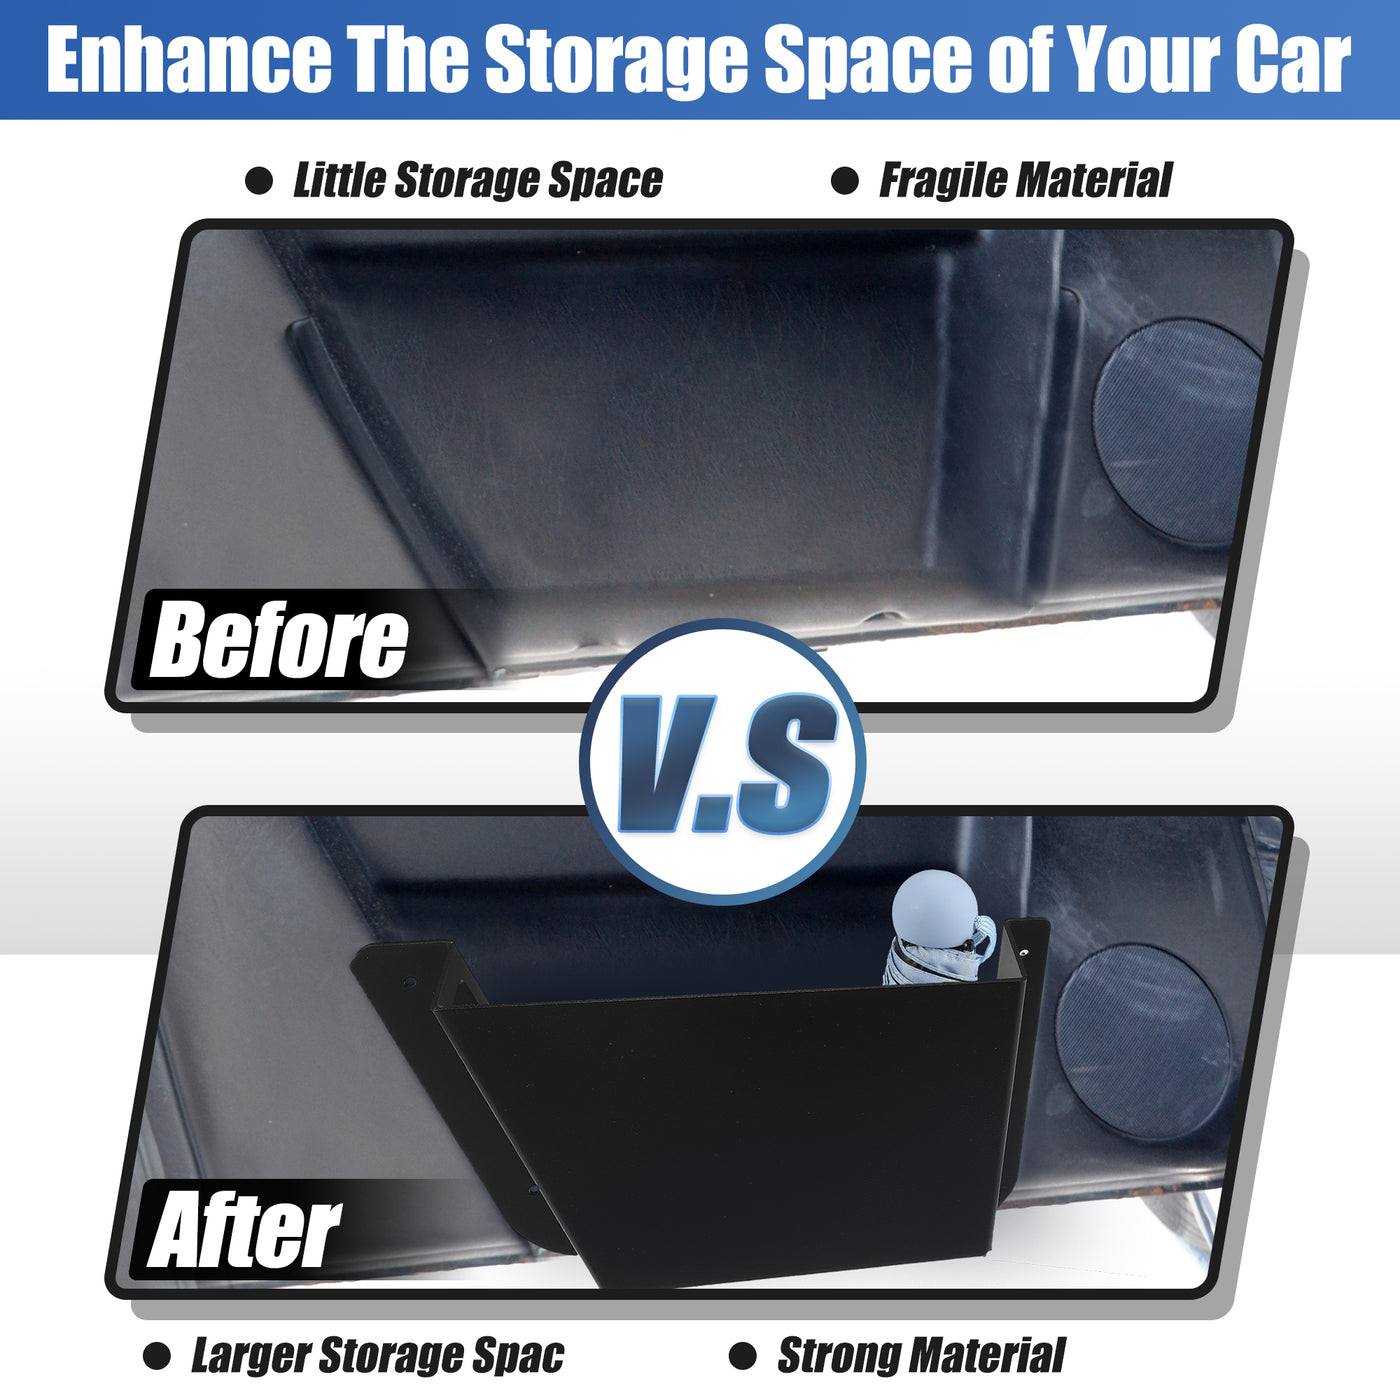 X AUTOHAUX Rear Door Storage Pockets Panels for Ford Bronco 2021 2022 2 4 Door Car Door Side Insert Organizer Box Interior Expansion Accessories Metal Pair